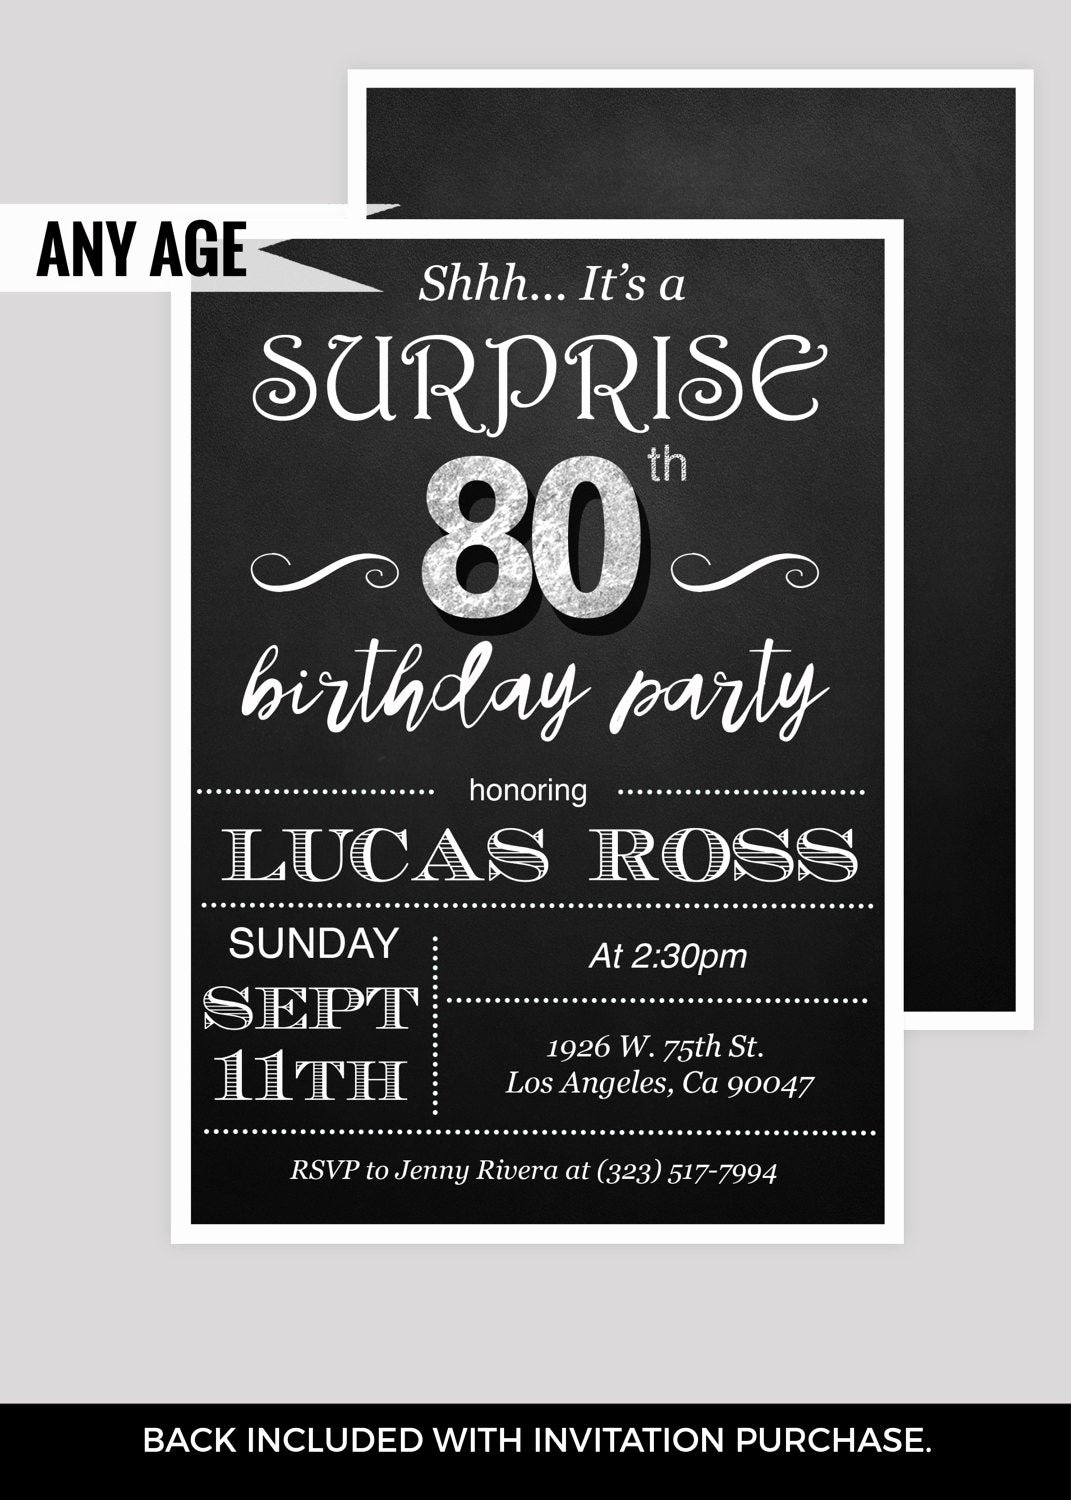 Free Printable Surprise Birthday Invitations Unique Surprise 80th Birthday Party Invitations by Diypartyinvitation